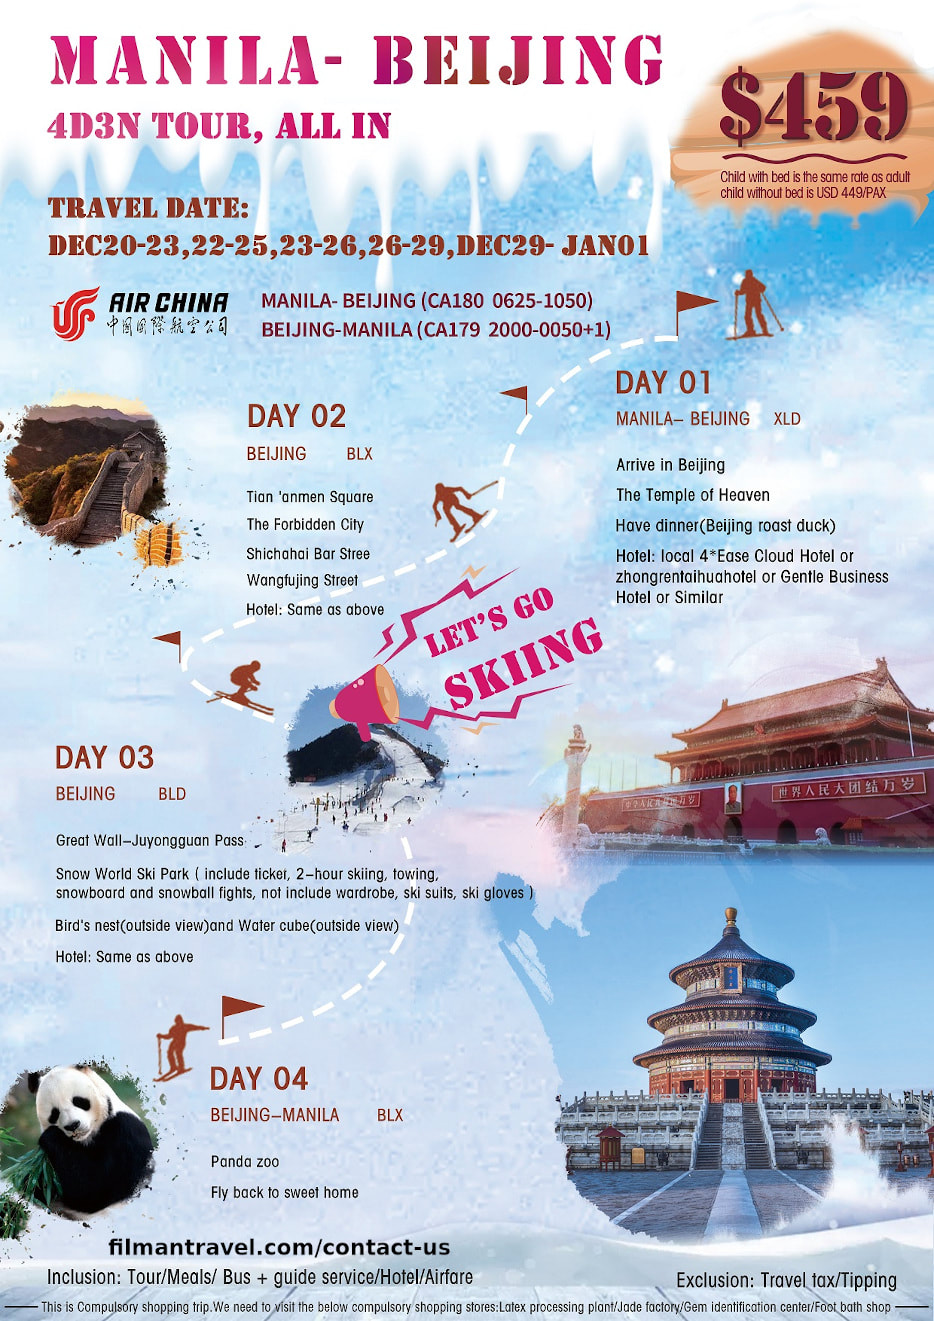 Manila Beijing December 2019 Tour, Flyer Image